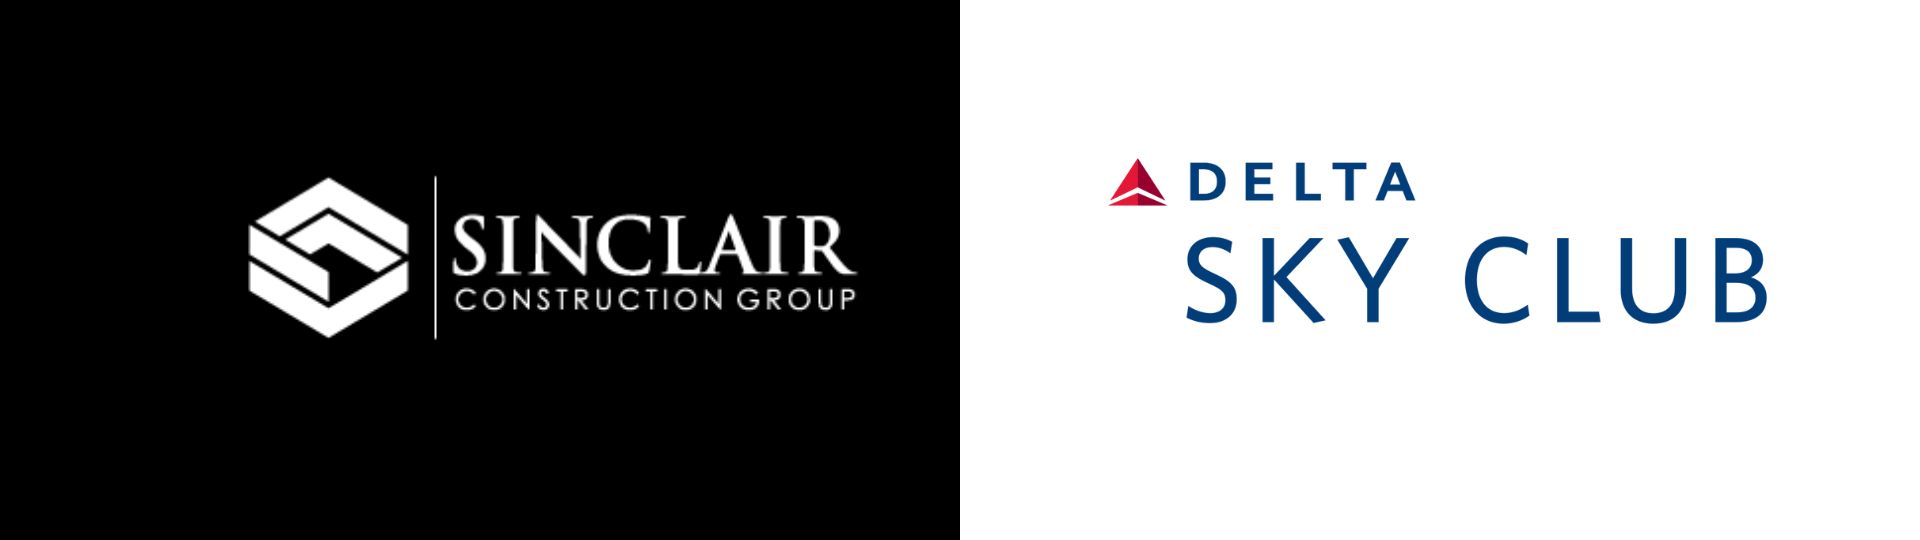 Sinclair CG Bid Won Delta Sky Club Atlanta Int'l Airport